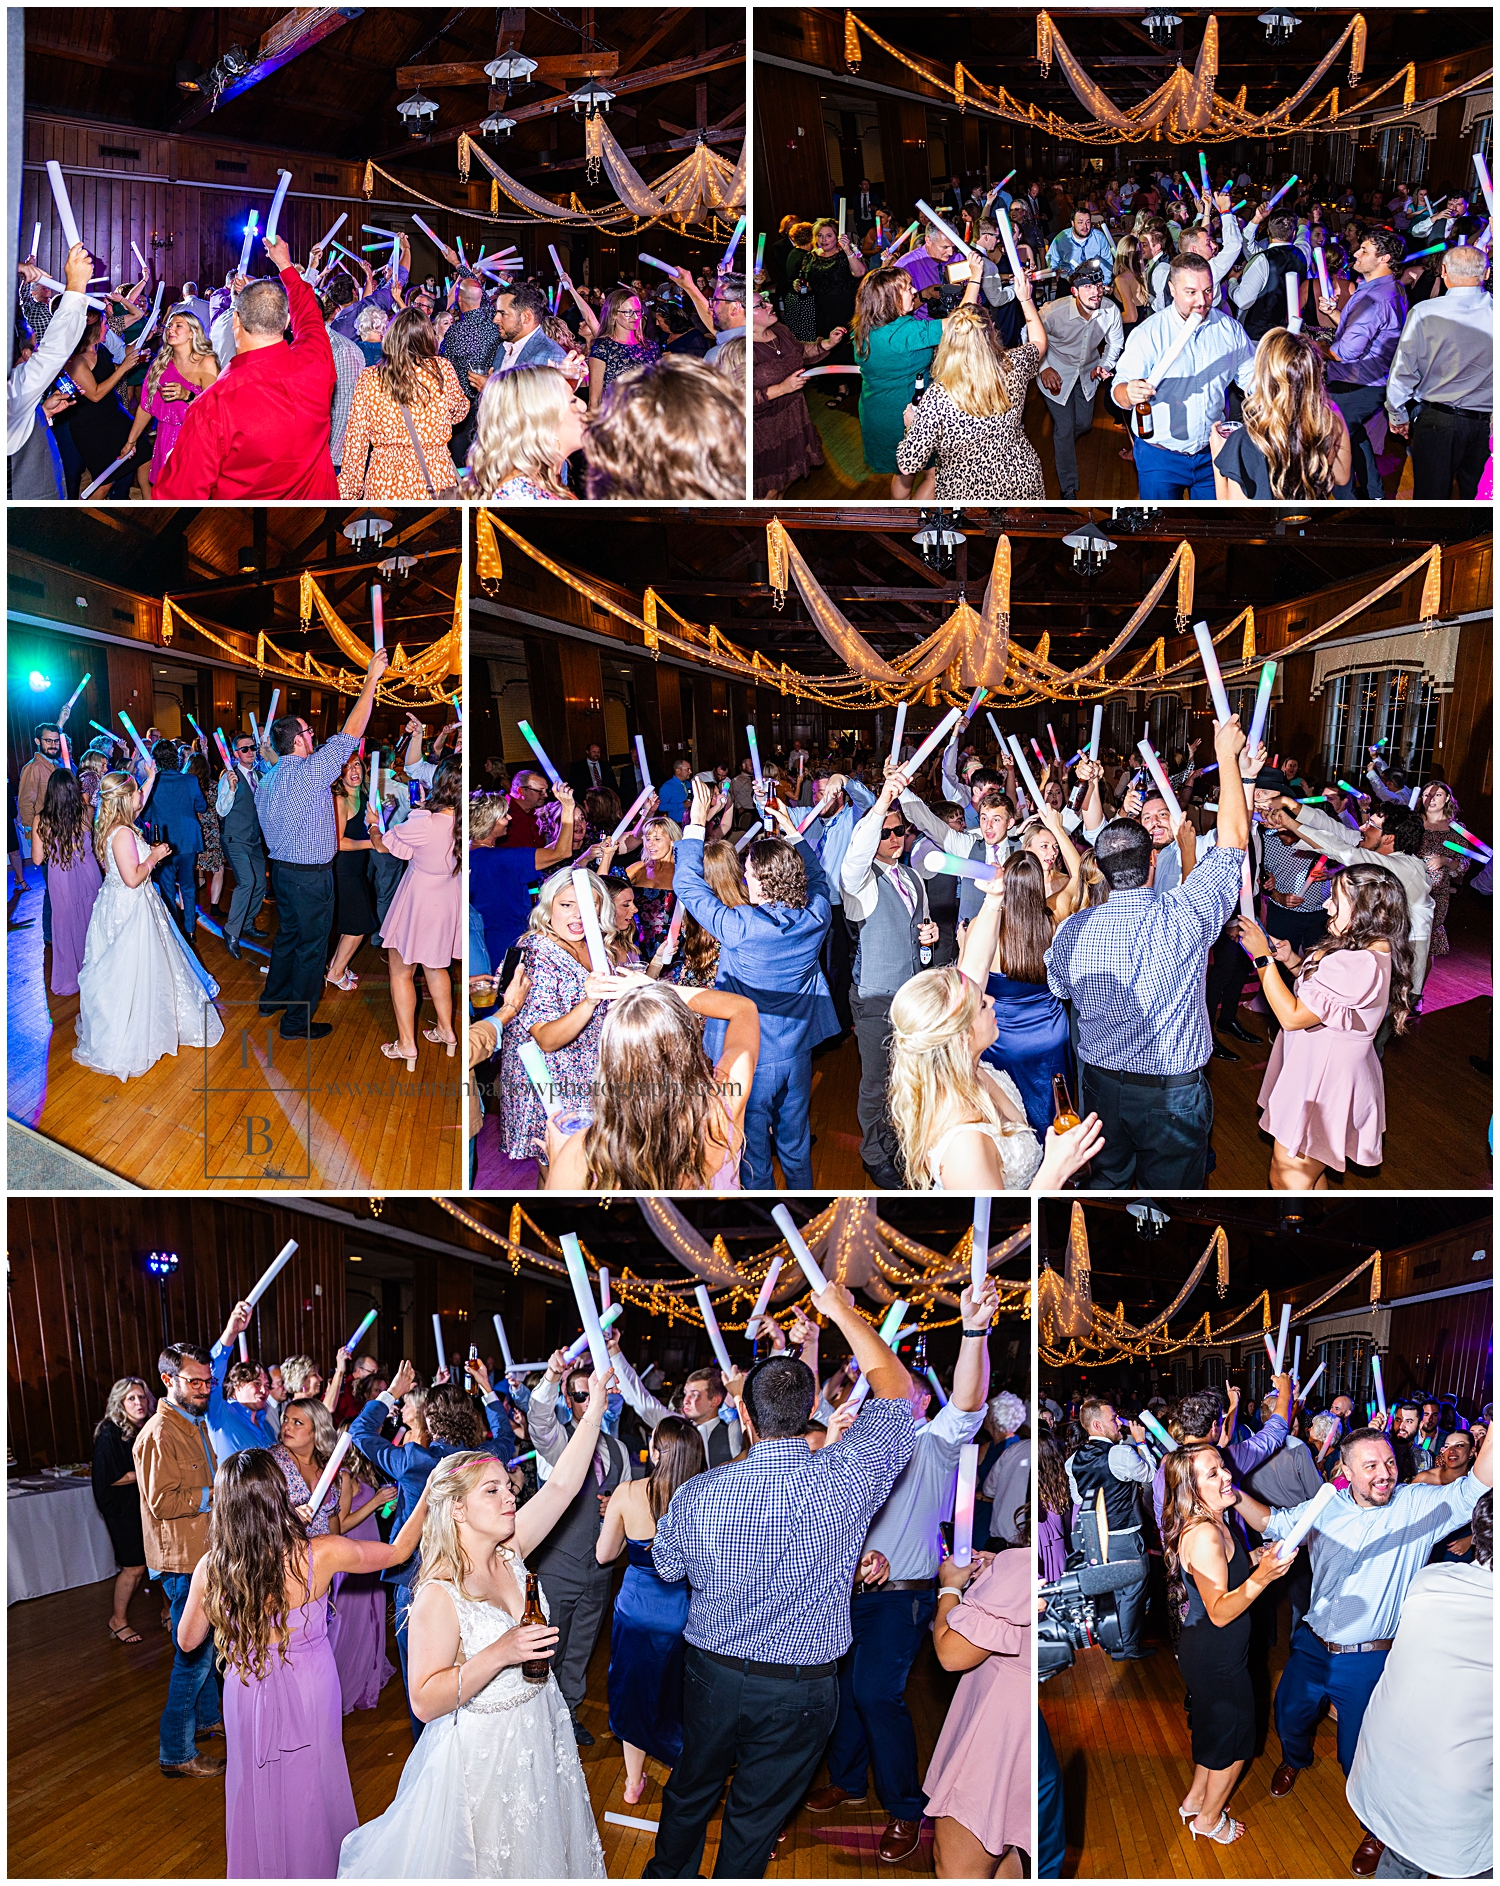 Wedding reception dance floor guests wave lighted wands.